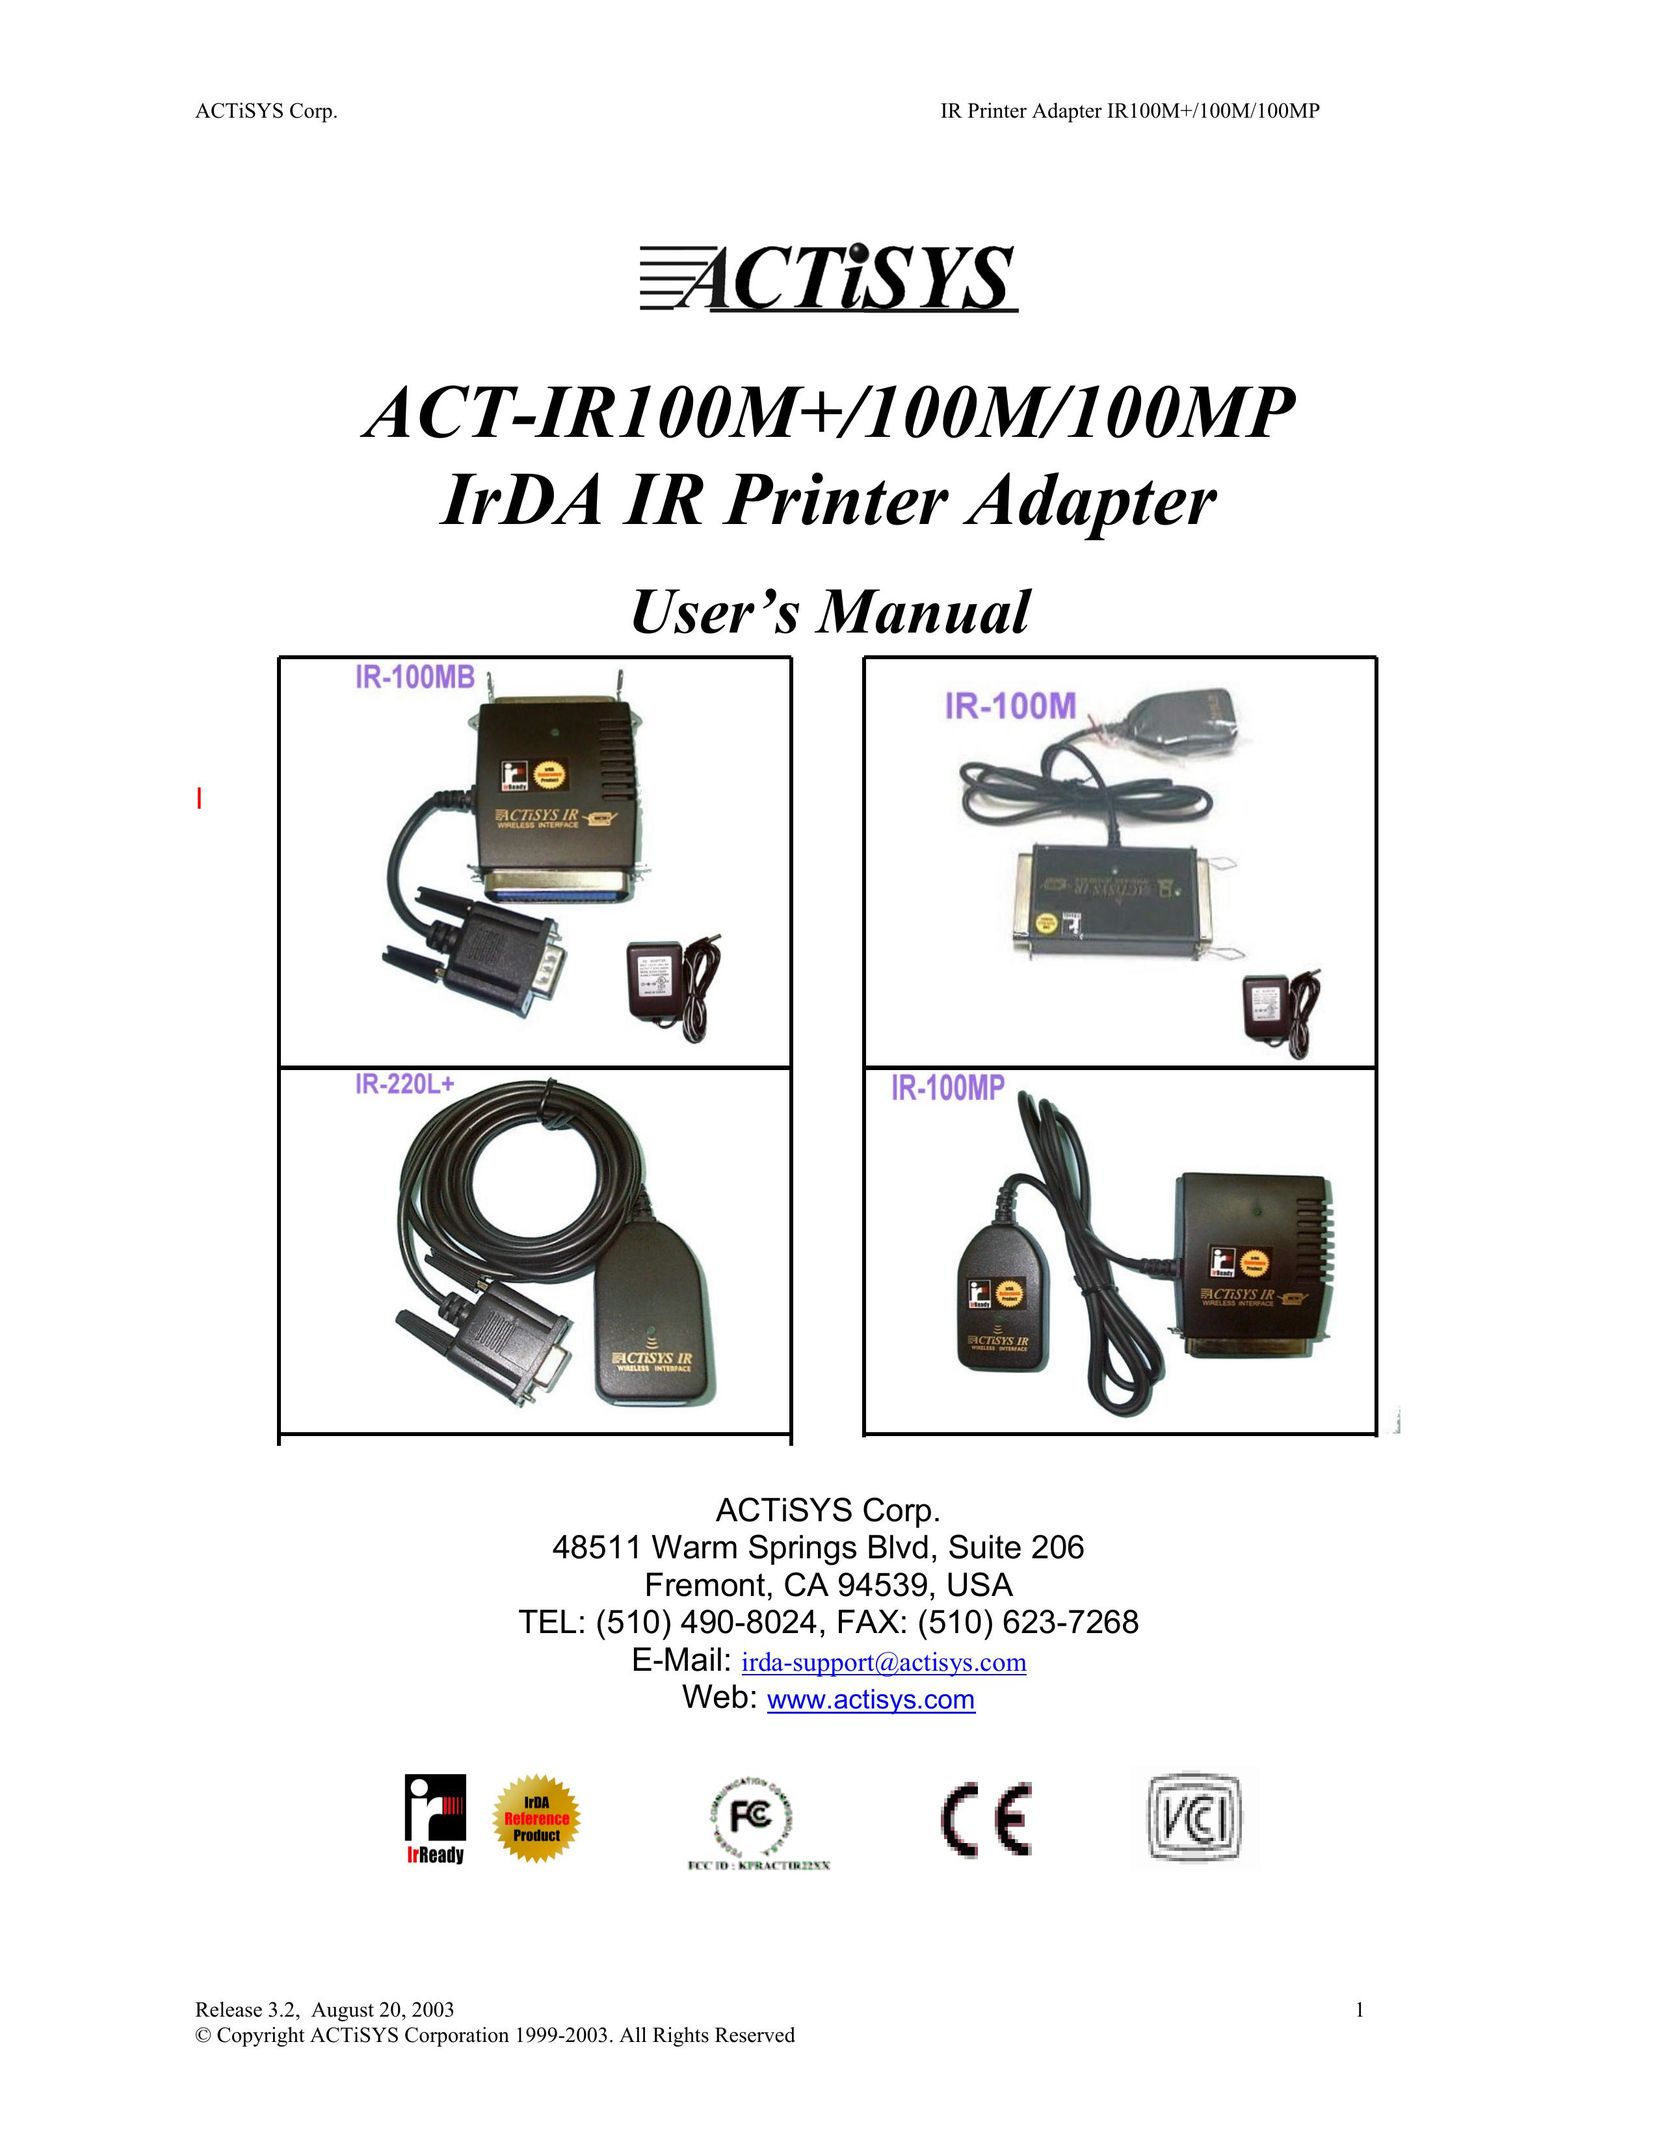 ACTiSYS ACT-IR100MP Network Card User Manual